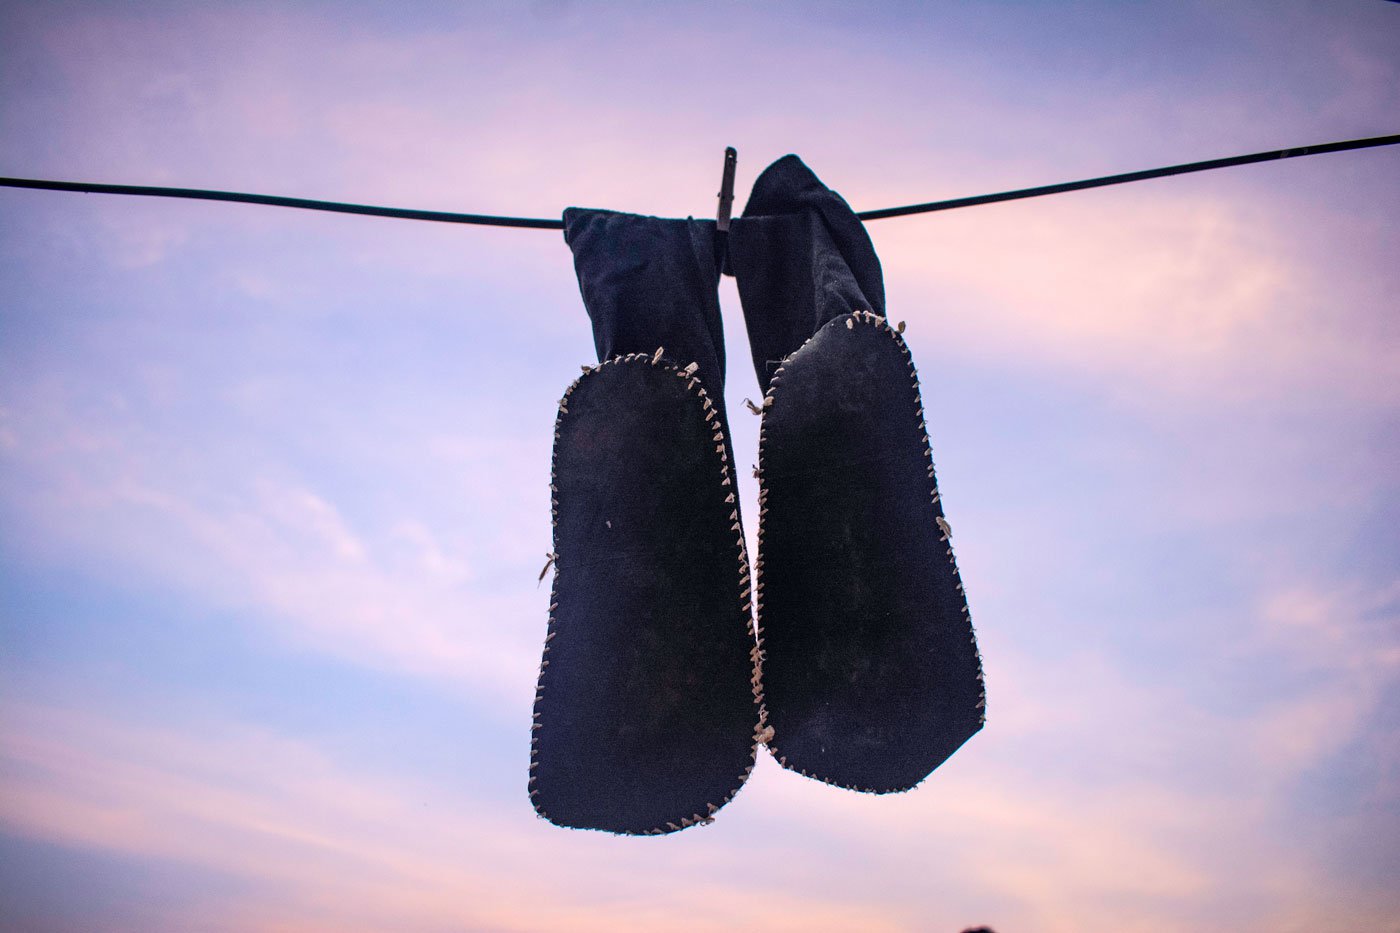 A few women wear black socks with a rudimentary refurbished base